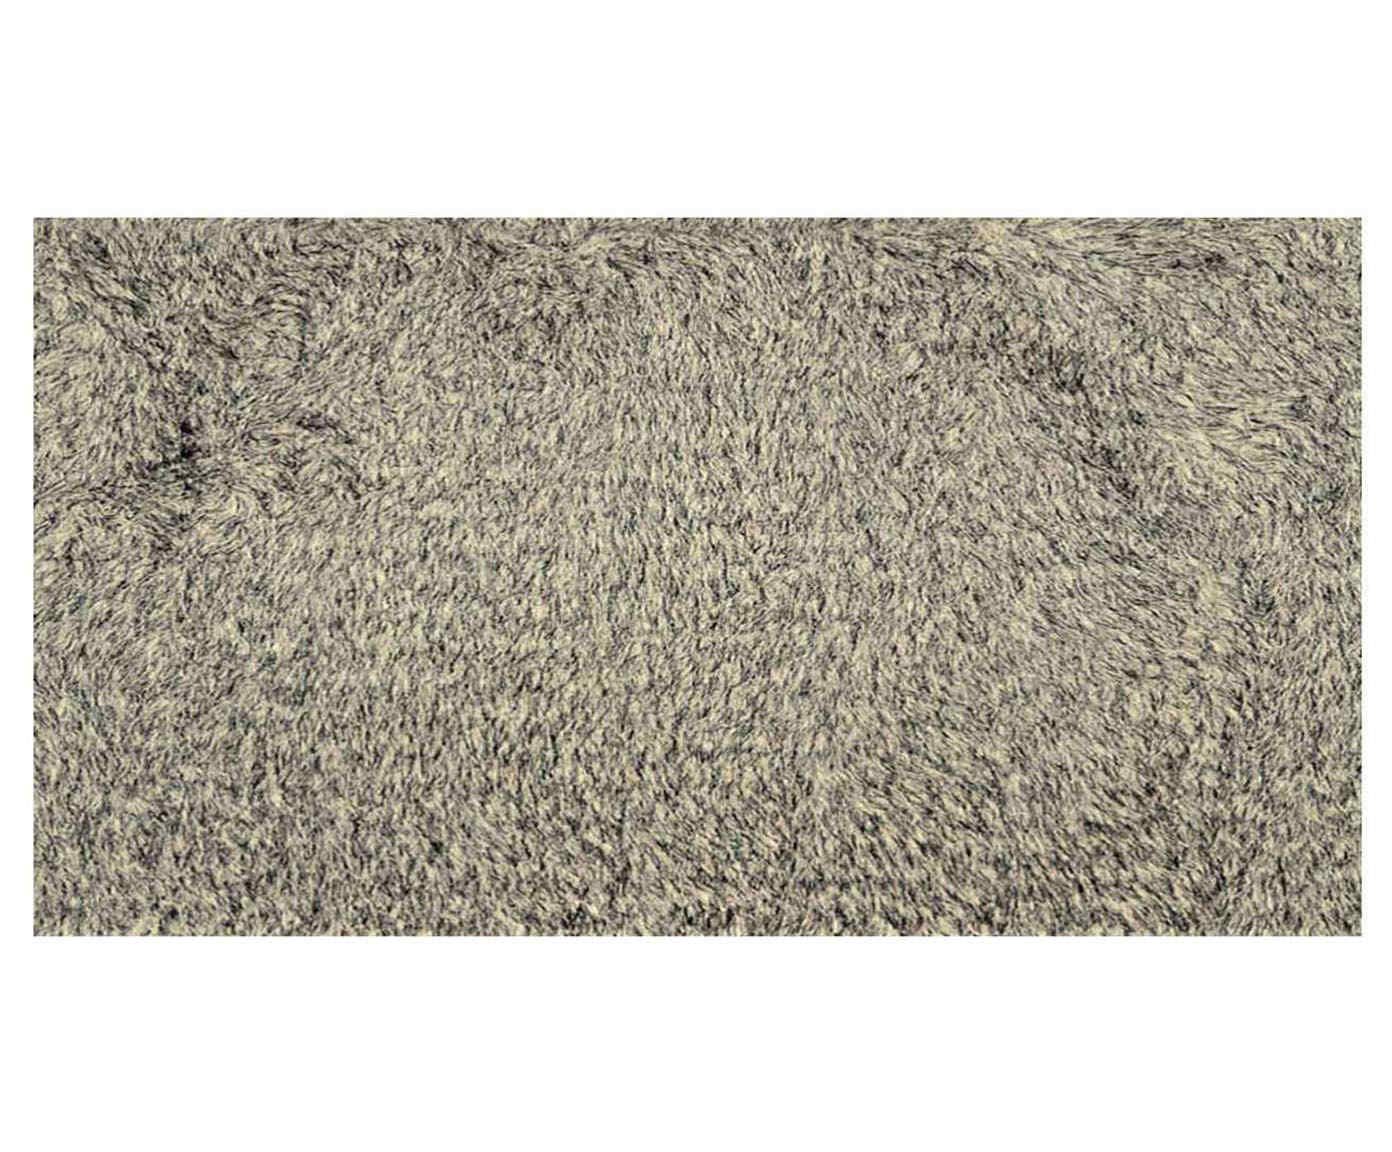 Tapete san marino shaggy sand - 200 x 250 cm | Westwing.com.br